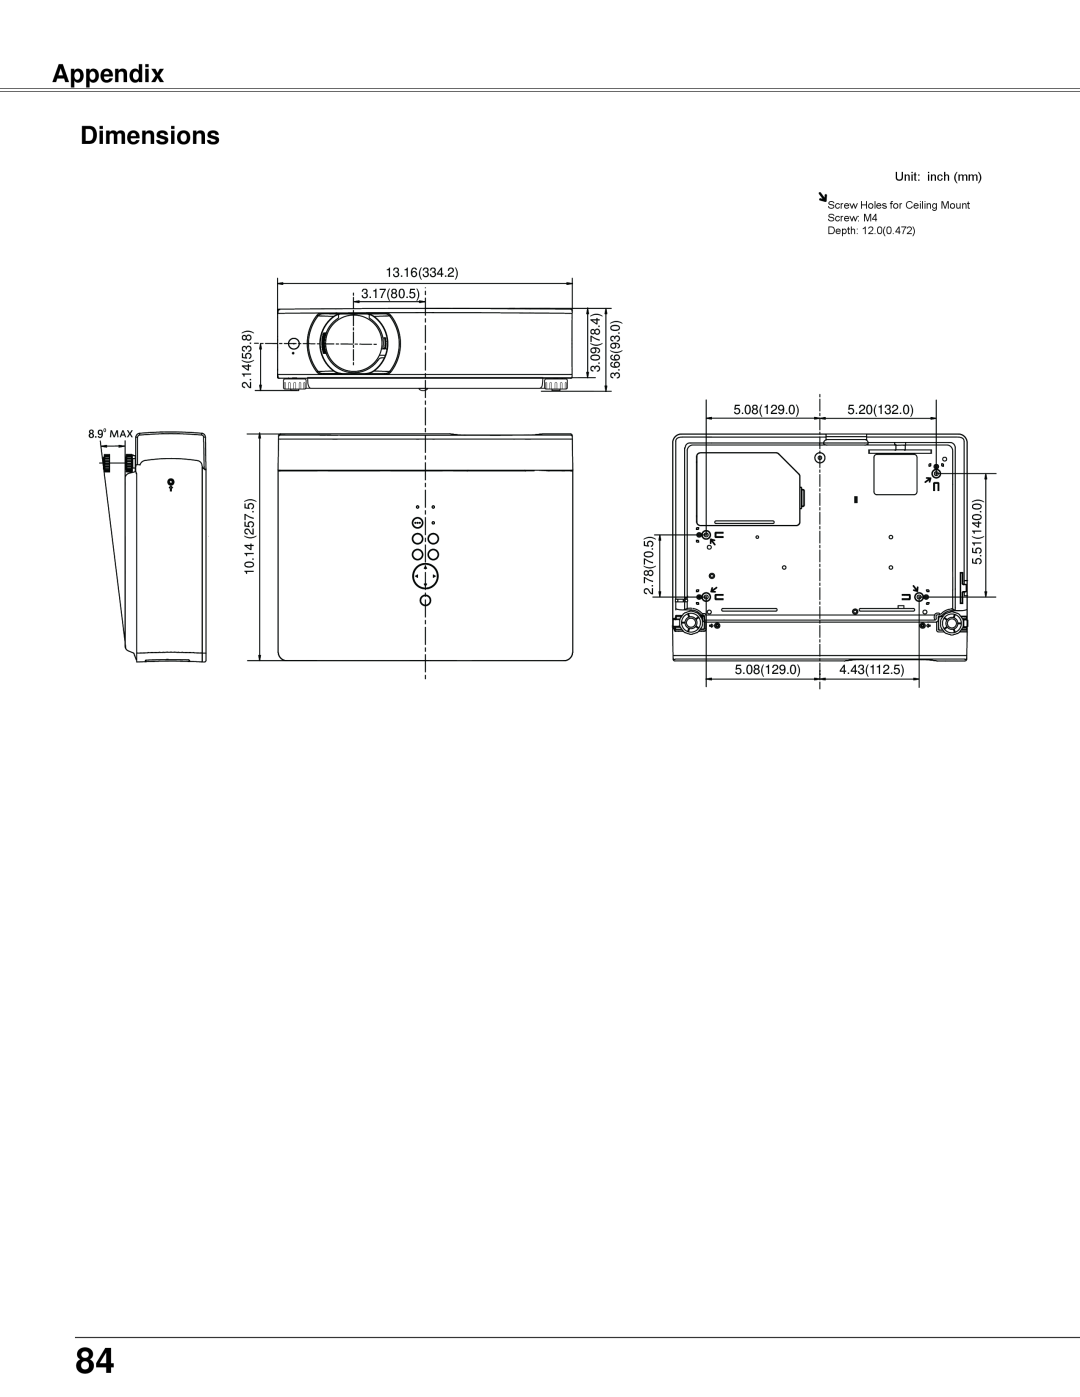 Sanyo PLC-WXU700 owner manual Appendix Dimensions, Unit inch mm 